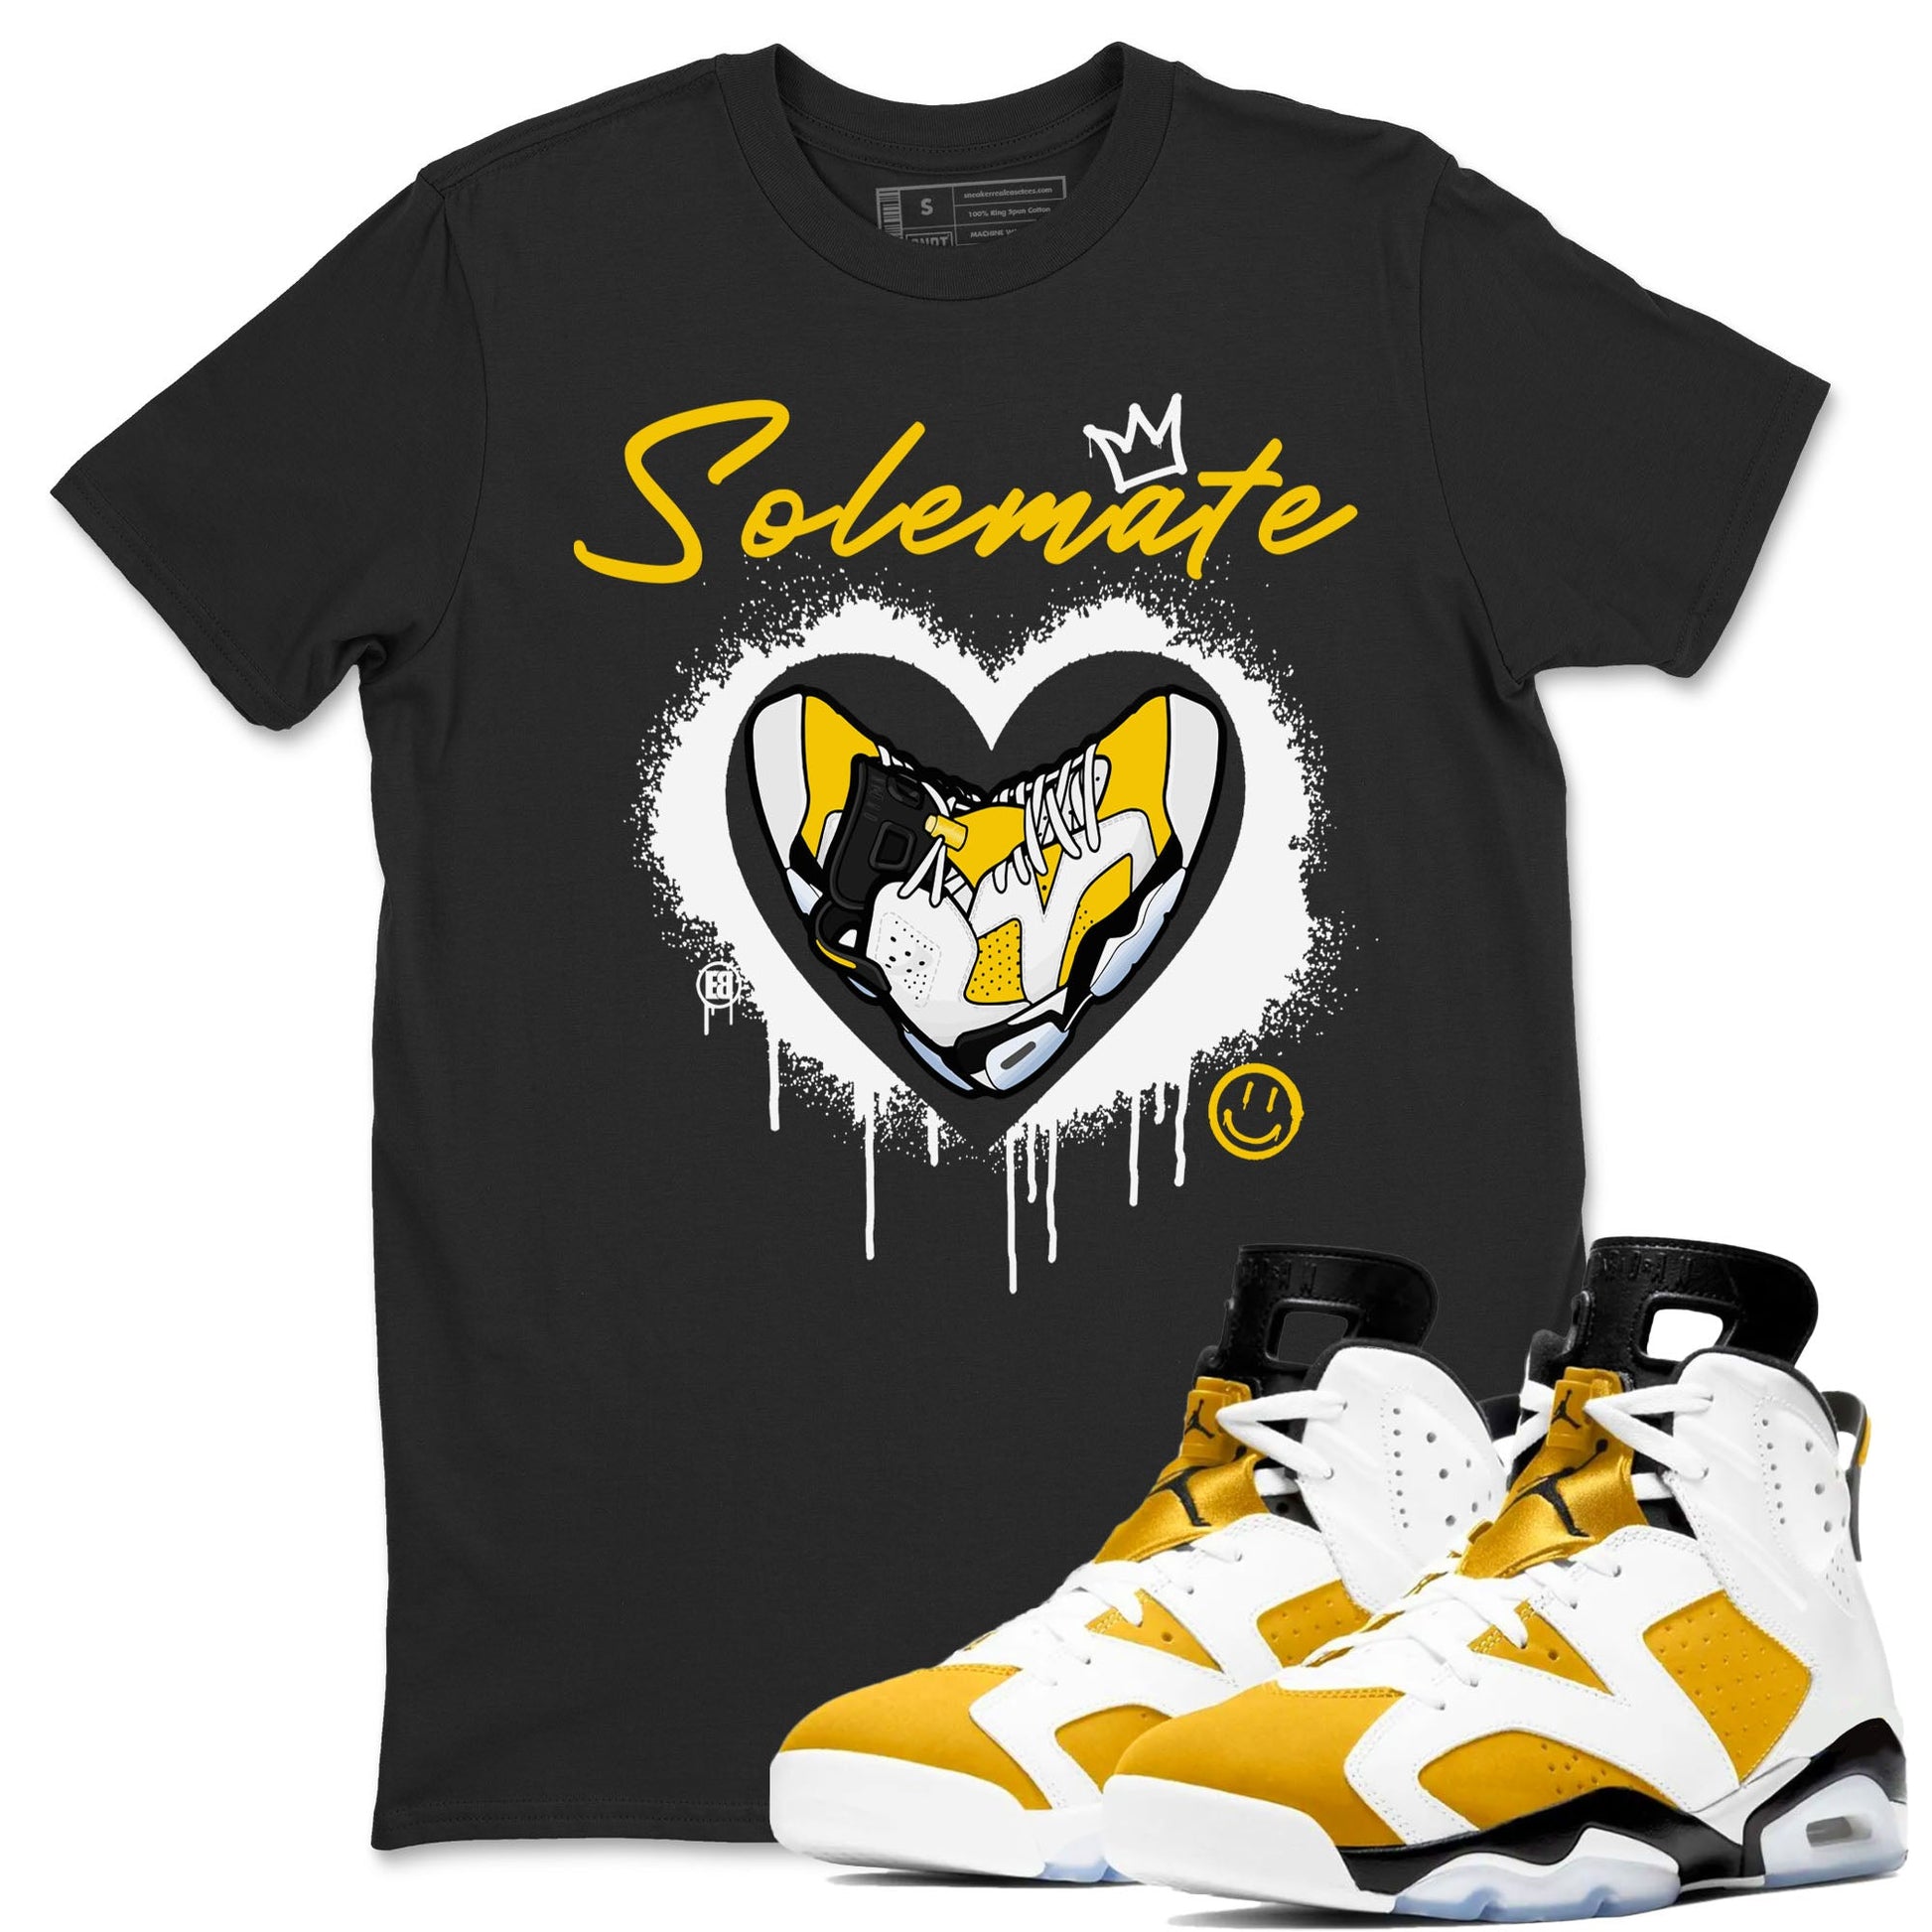 Solemate sneaker match tees to 6s Yellow Ochre street fashion brand for shirts to match Jordans Drip Gear Zone Air Jordan 6 Yellow Ochre unisex t-shirt Black 1 unisex shirt